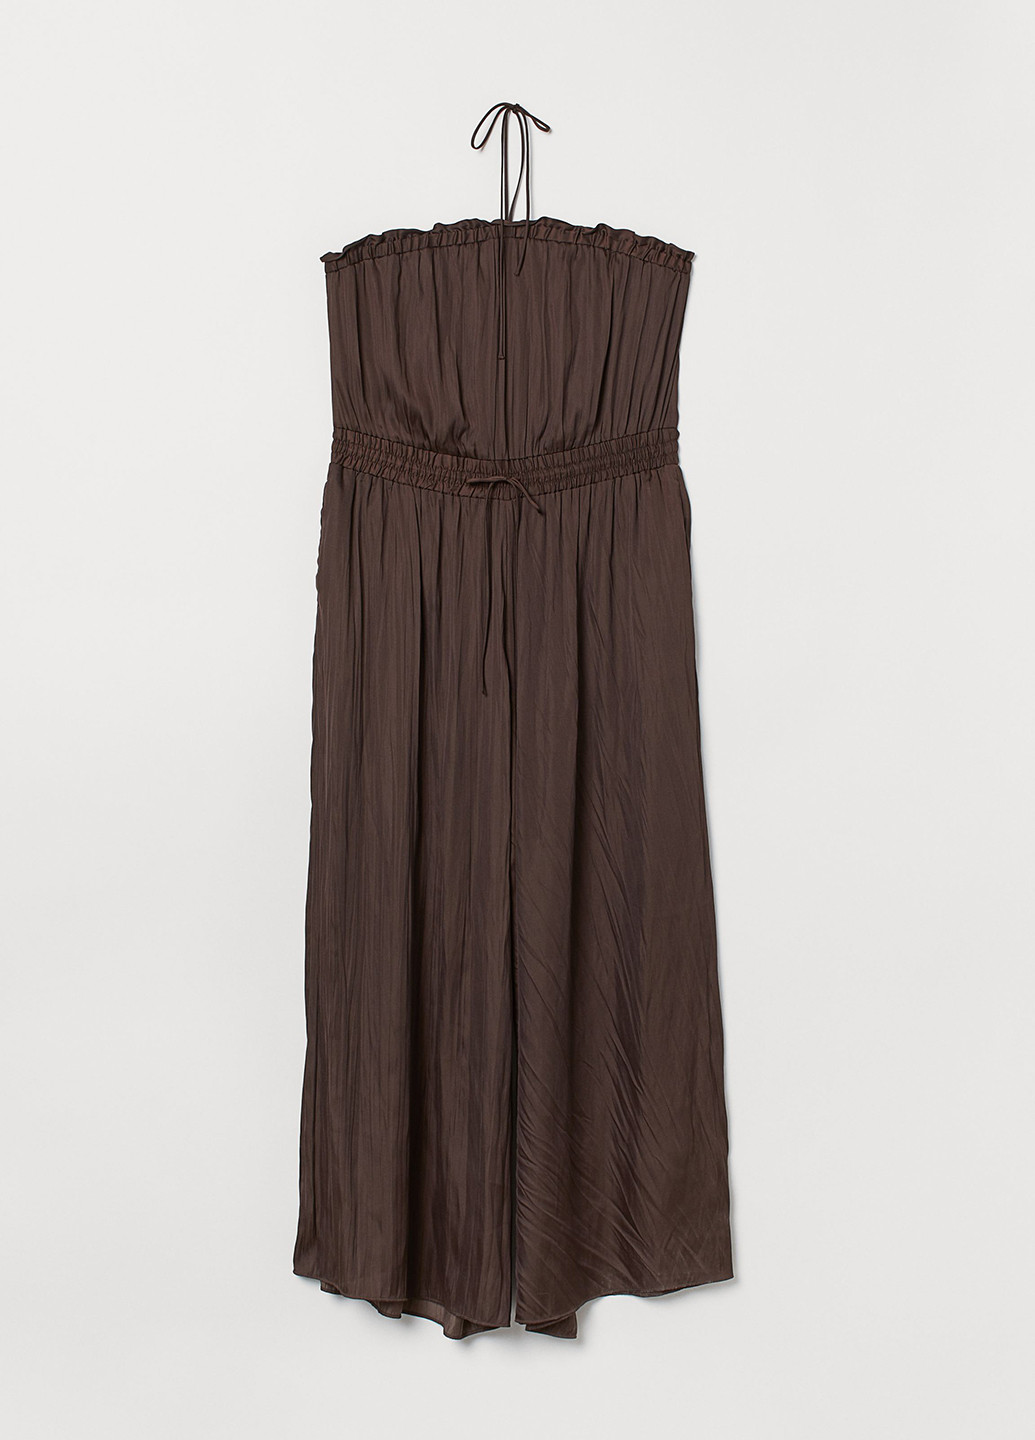 Комбинезон H&M комбинезон-брюки однотонный тёмно-коричневый кэжуал полиэстер